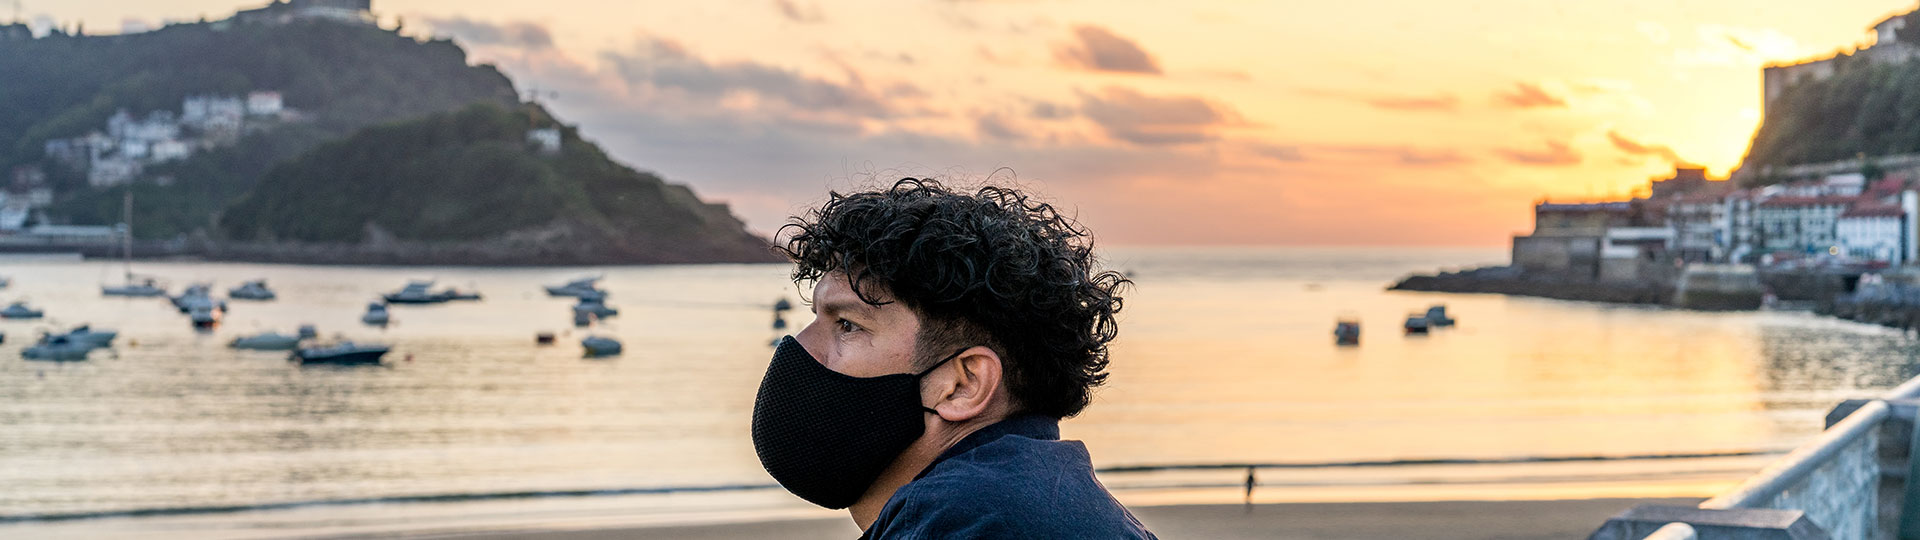 Boy with mask looking at the sunset on La Concha beach, San Sebastian